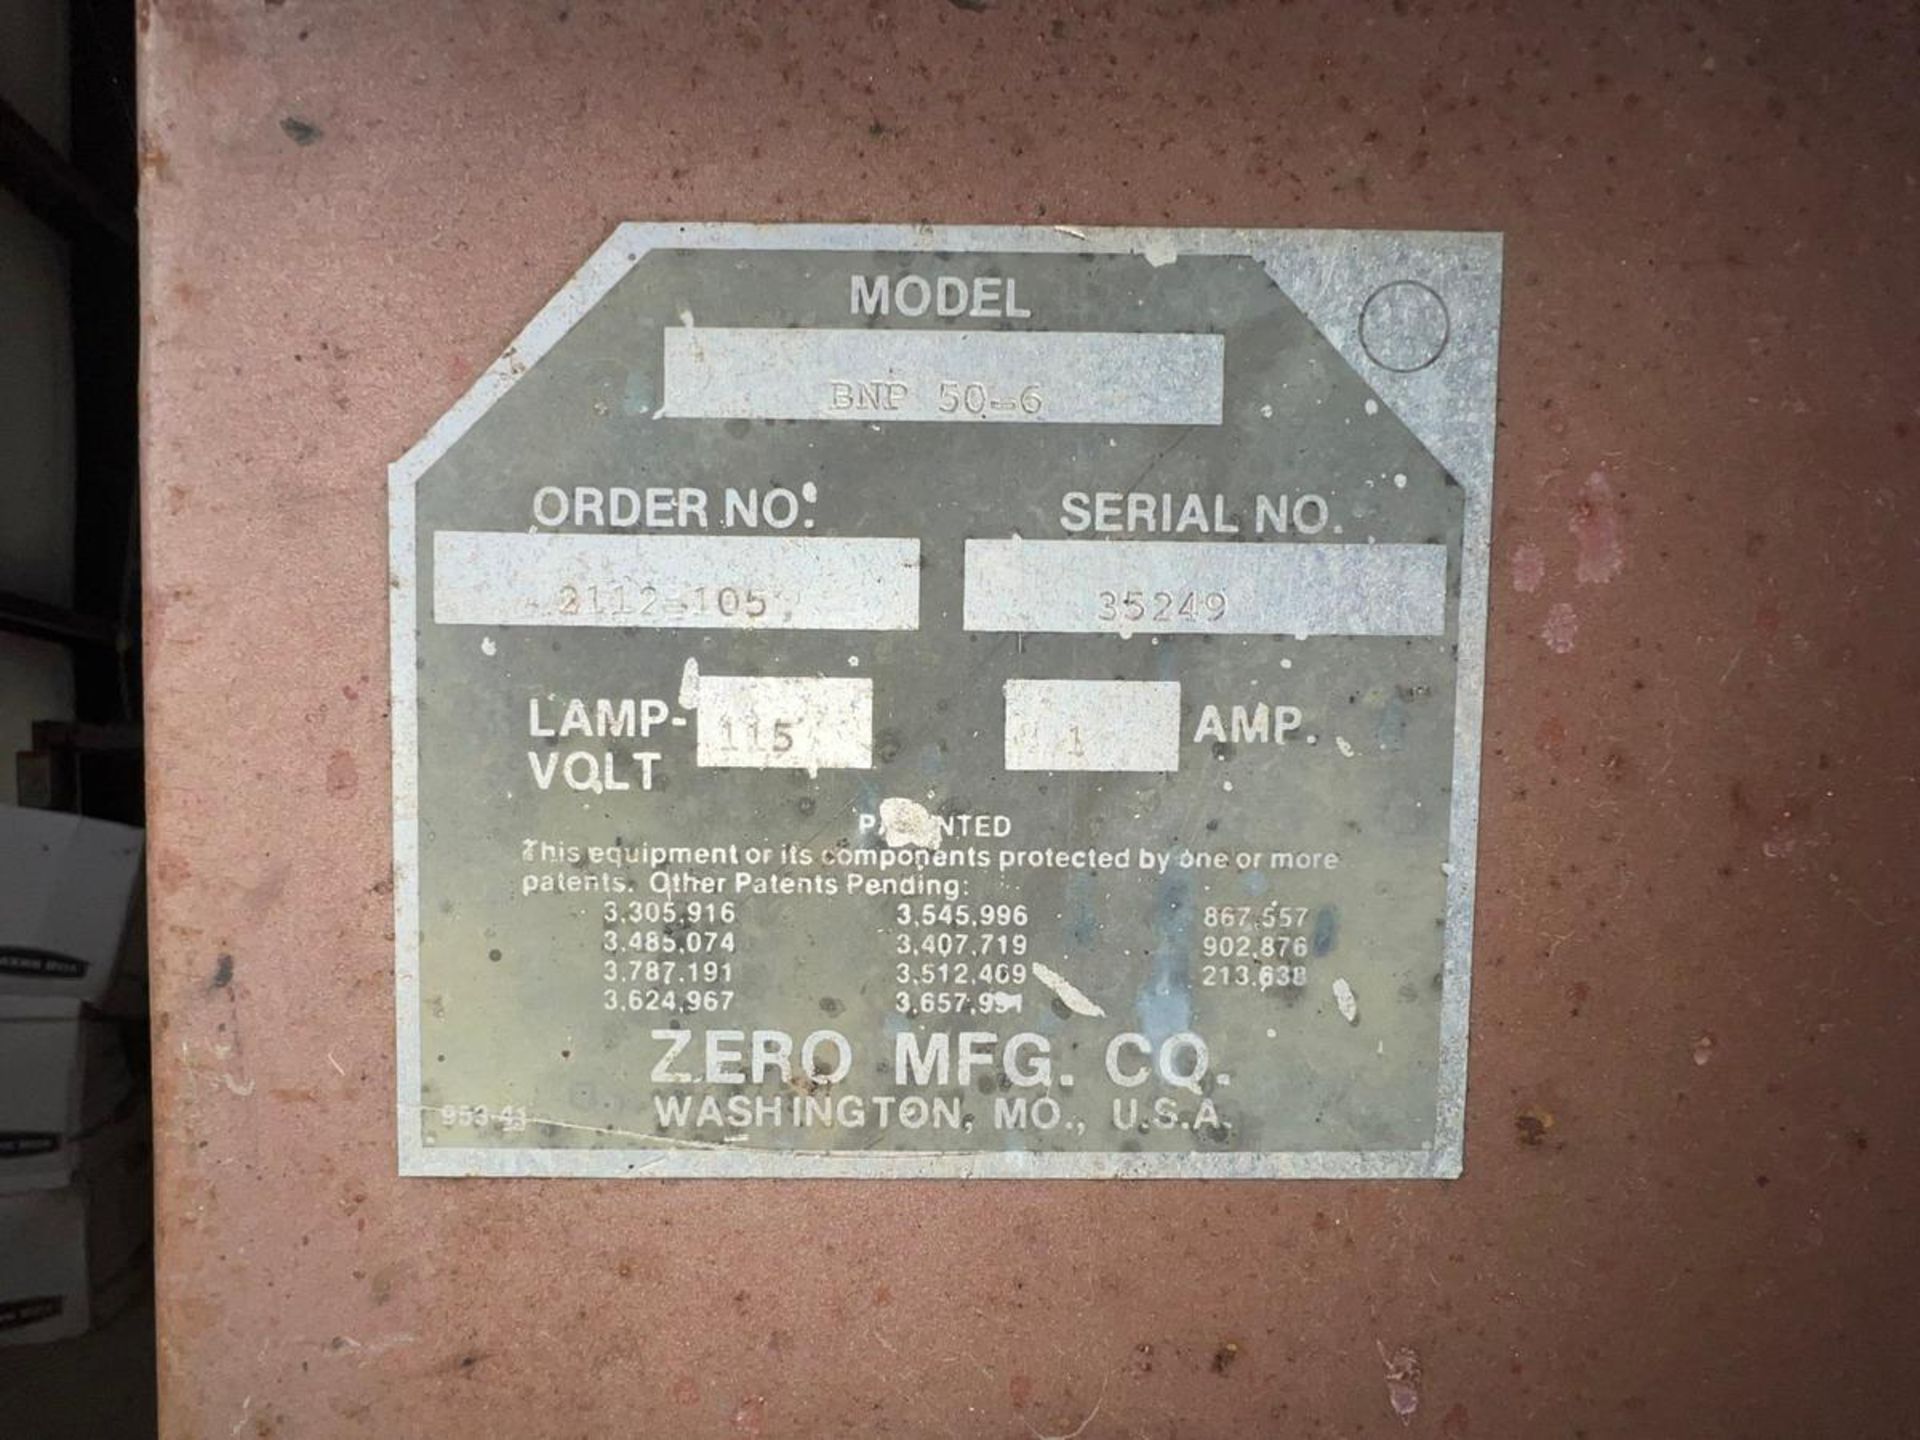 Zero BNP 50-6 26'' w x 42'' L dry Blast Cabinet - Image 6 of 6